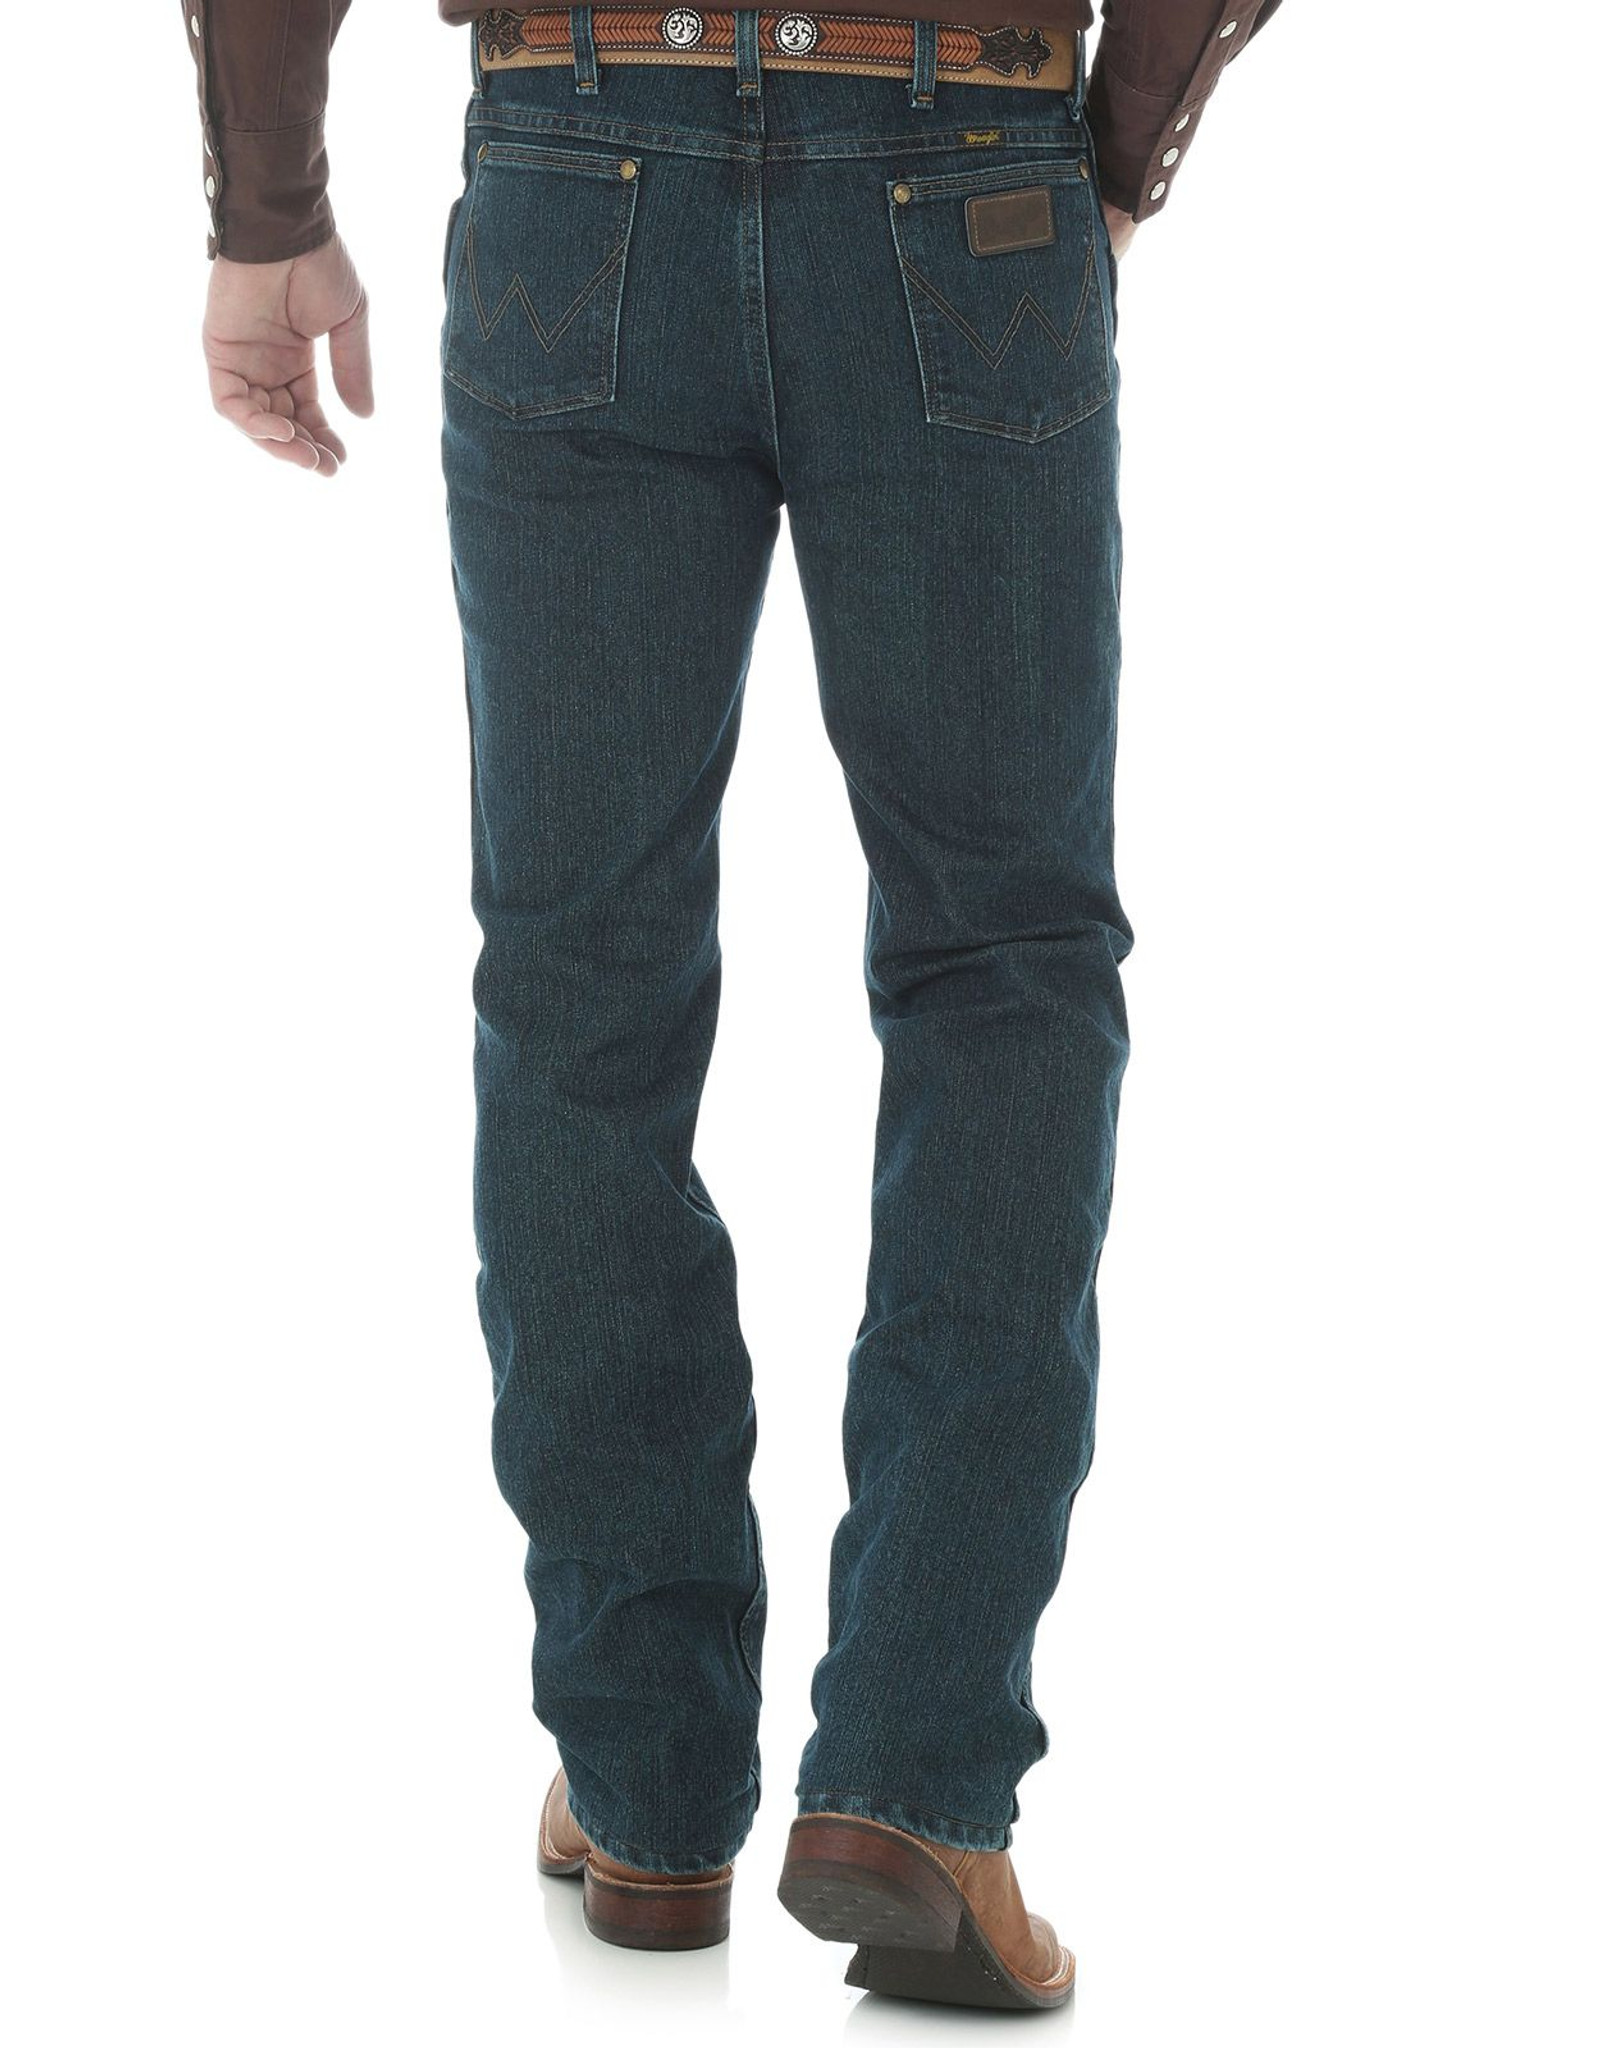 Men's Slim Fit Dark Wash Denim Jeans